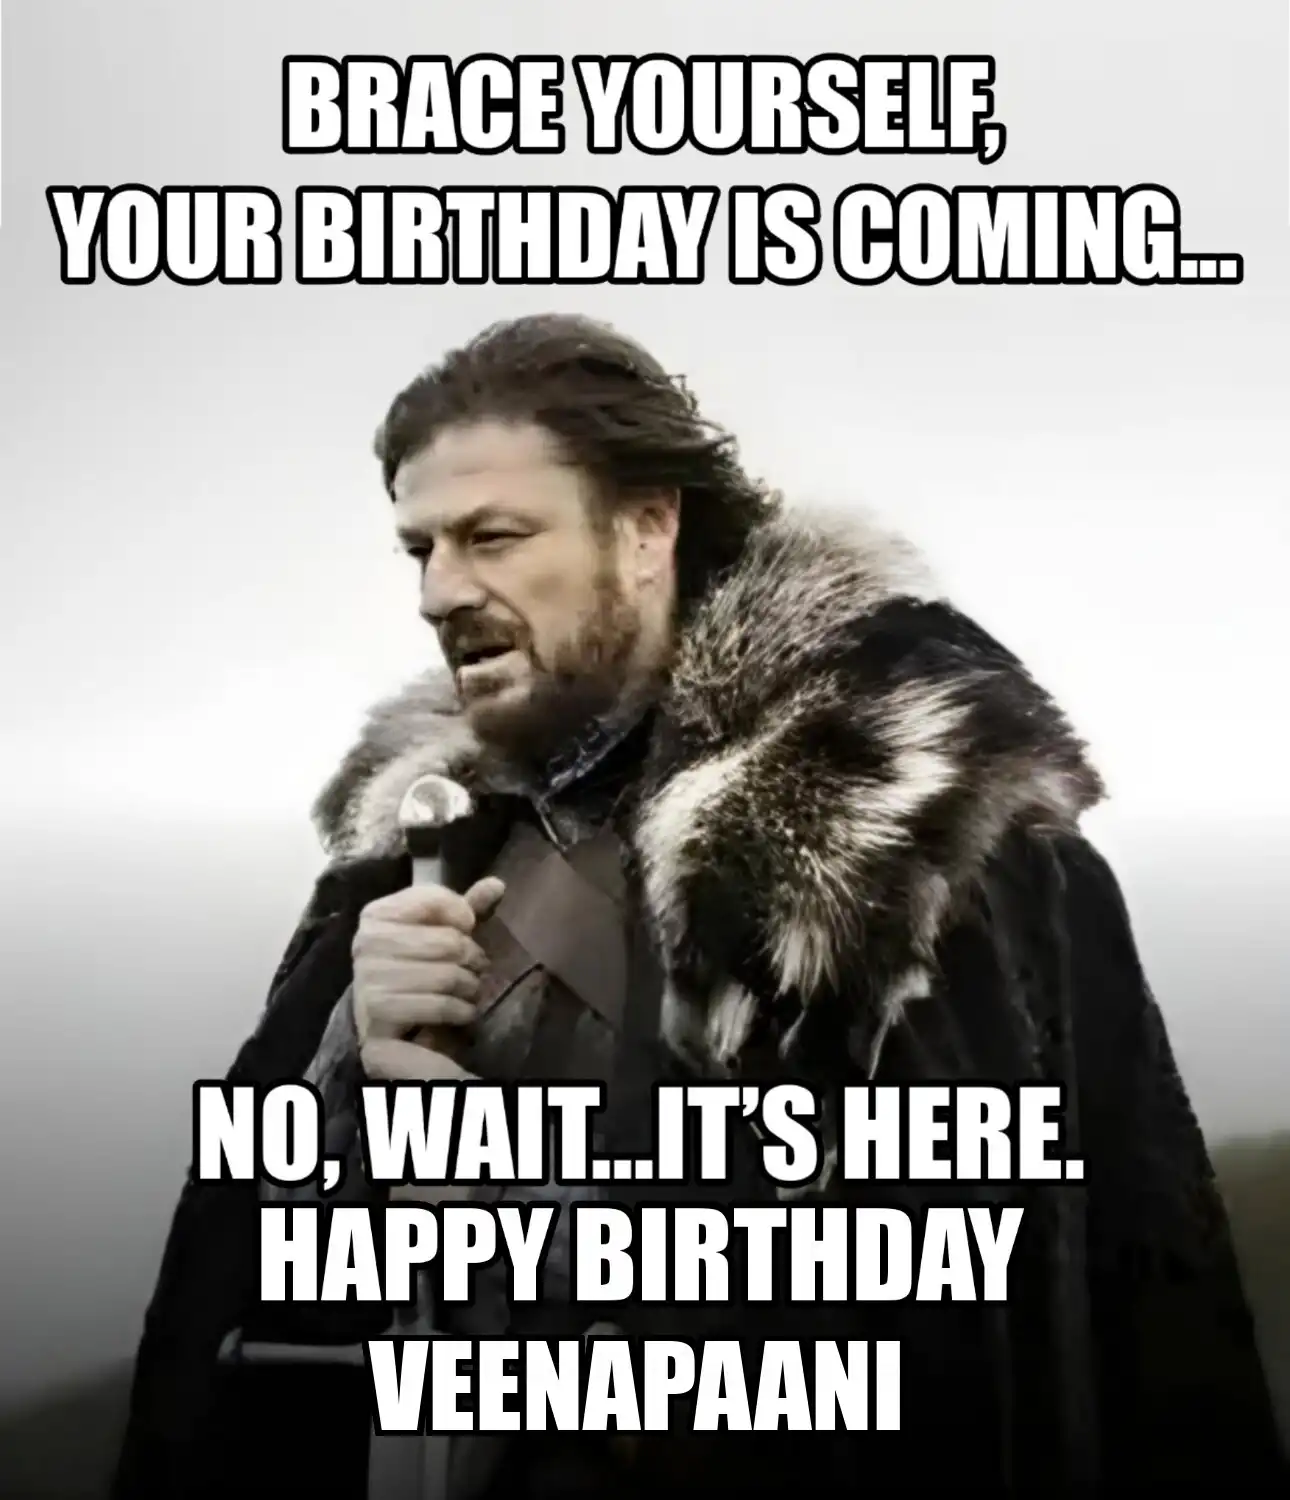 Happy Birthday Veenapaani Brace Yourself Your Birthday Is Coming Meme